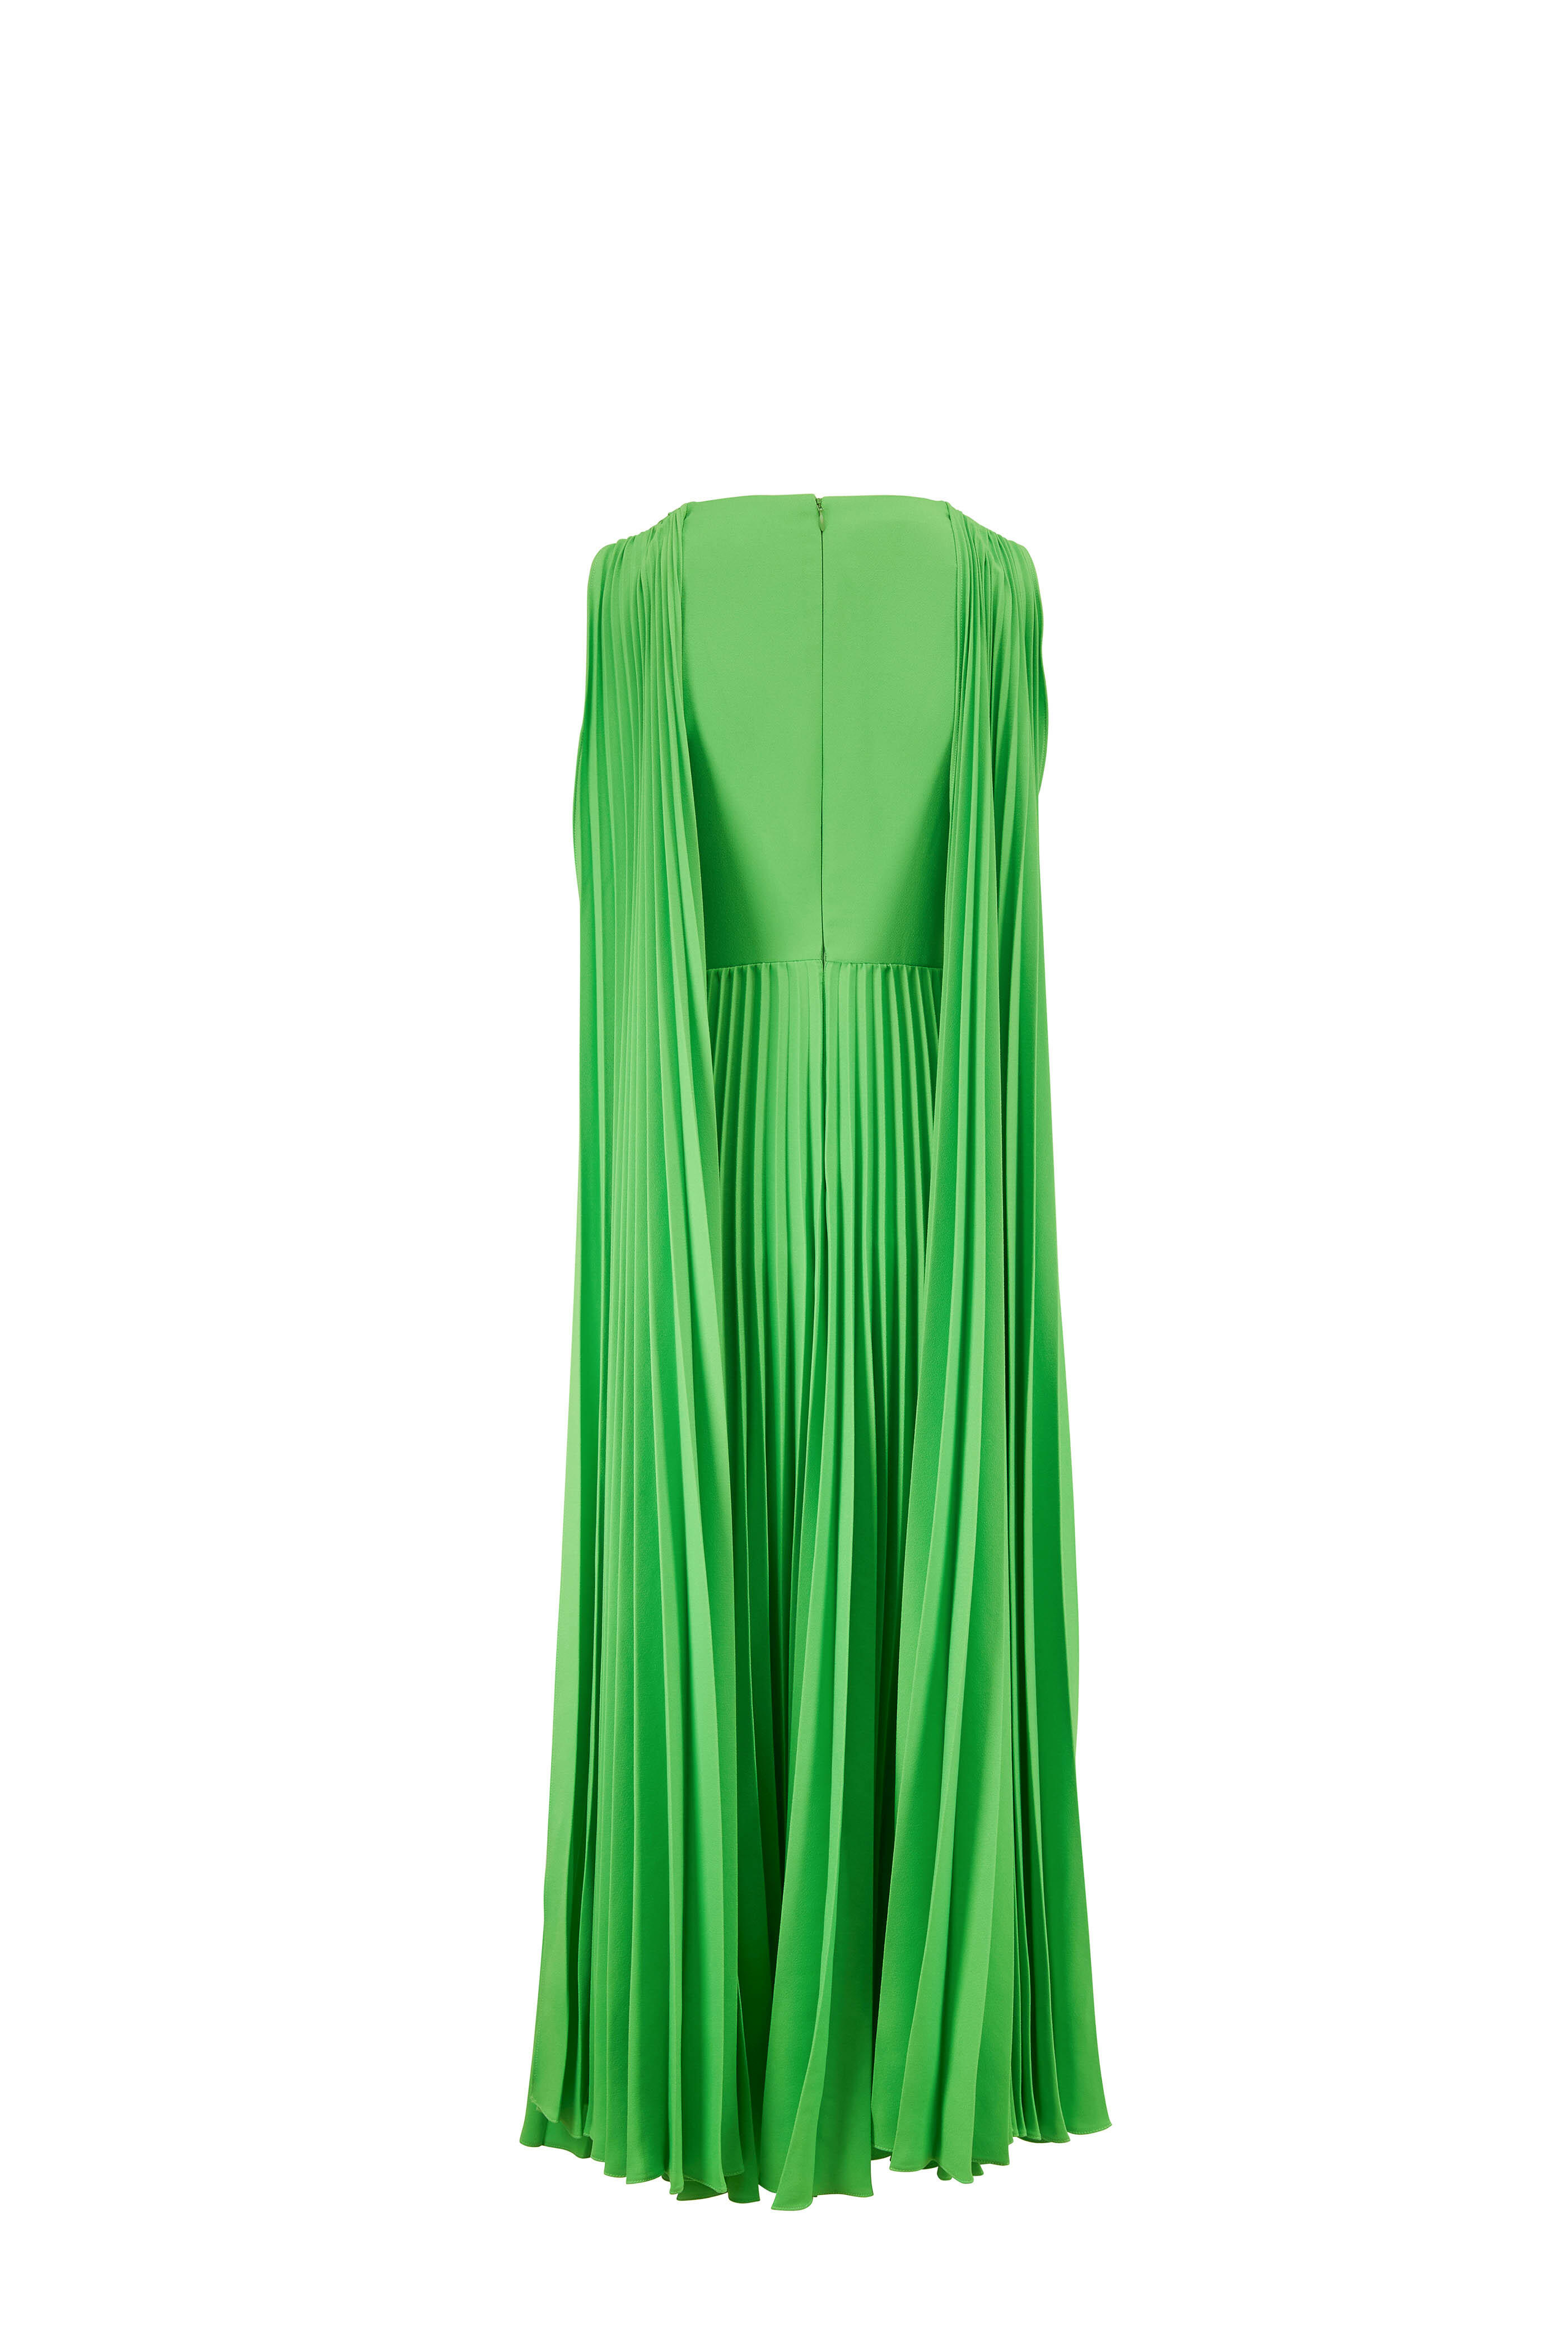 Nonsens Plenarmøde Adskillelse Valentino - Lime Green Plissé Midi Cape Dress | Mitchell Stores